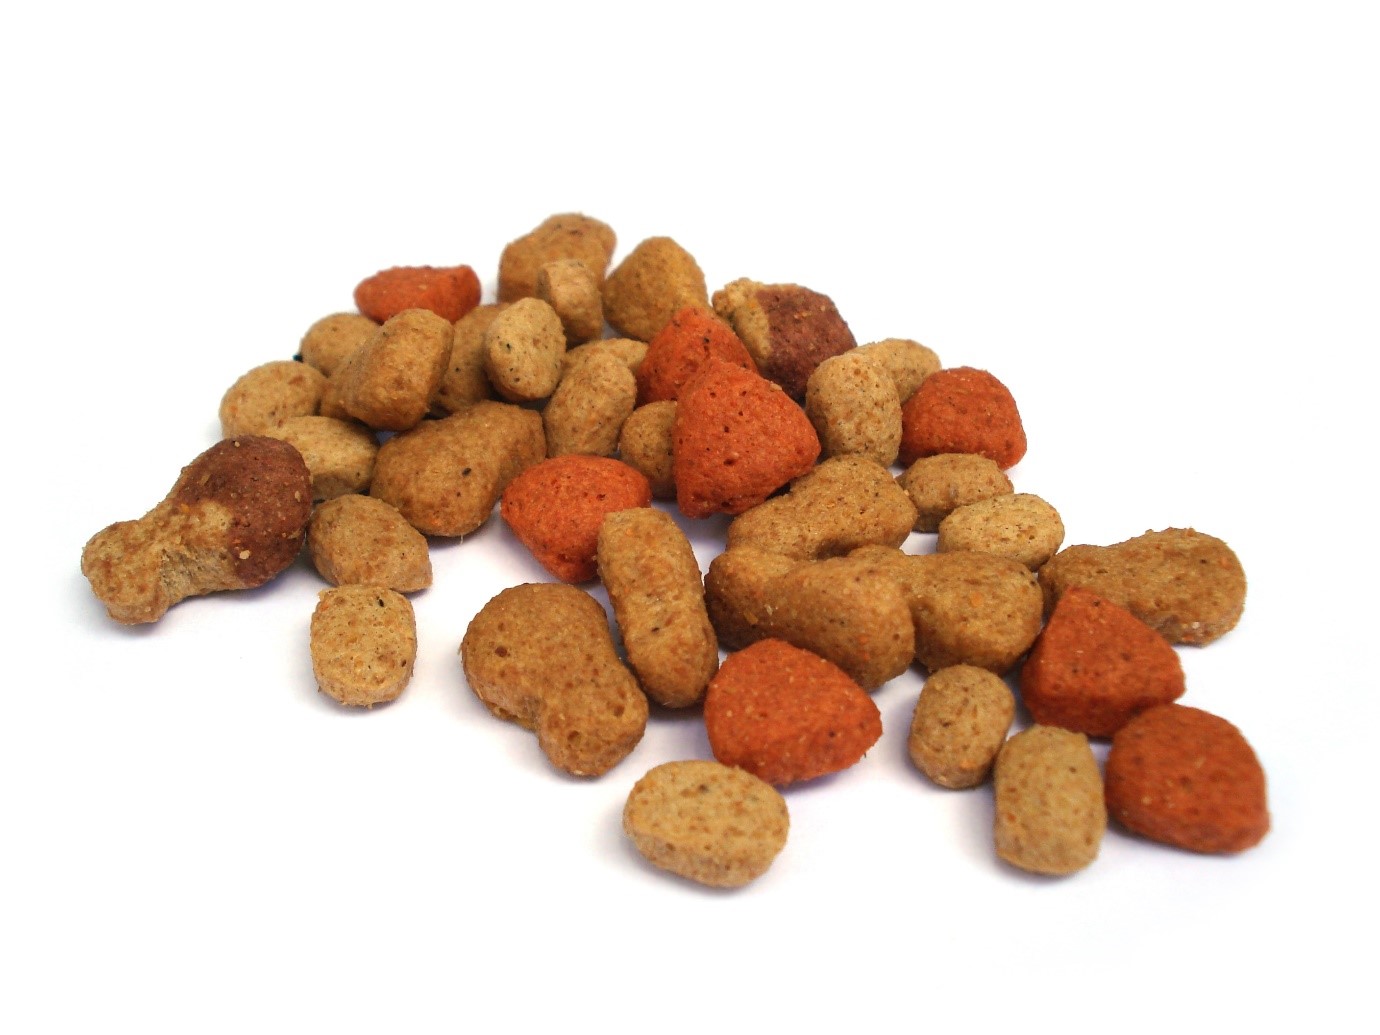 Canada Raw Dog Food: Benefits, Risks, & Dietary Concerns